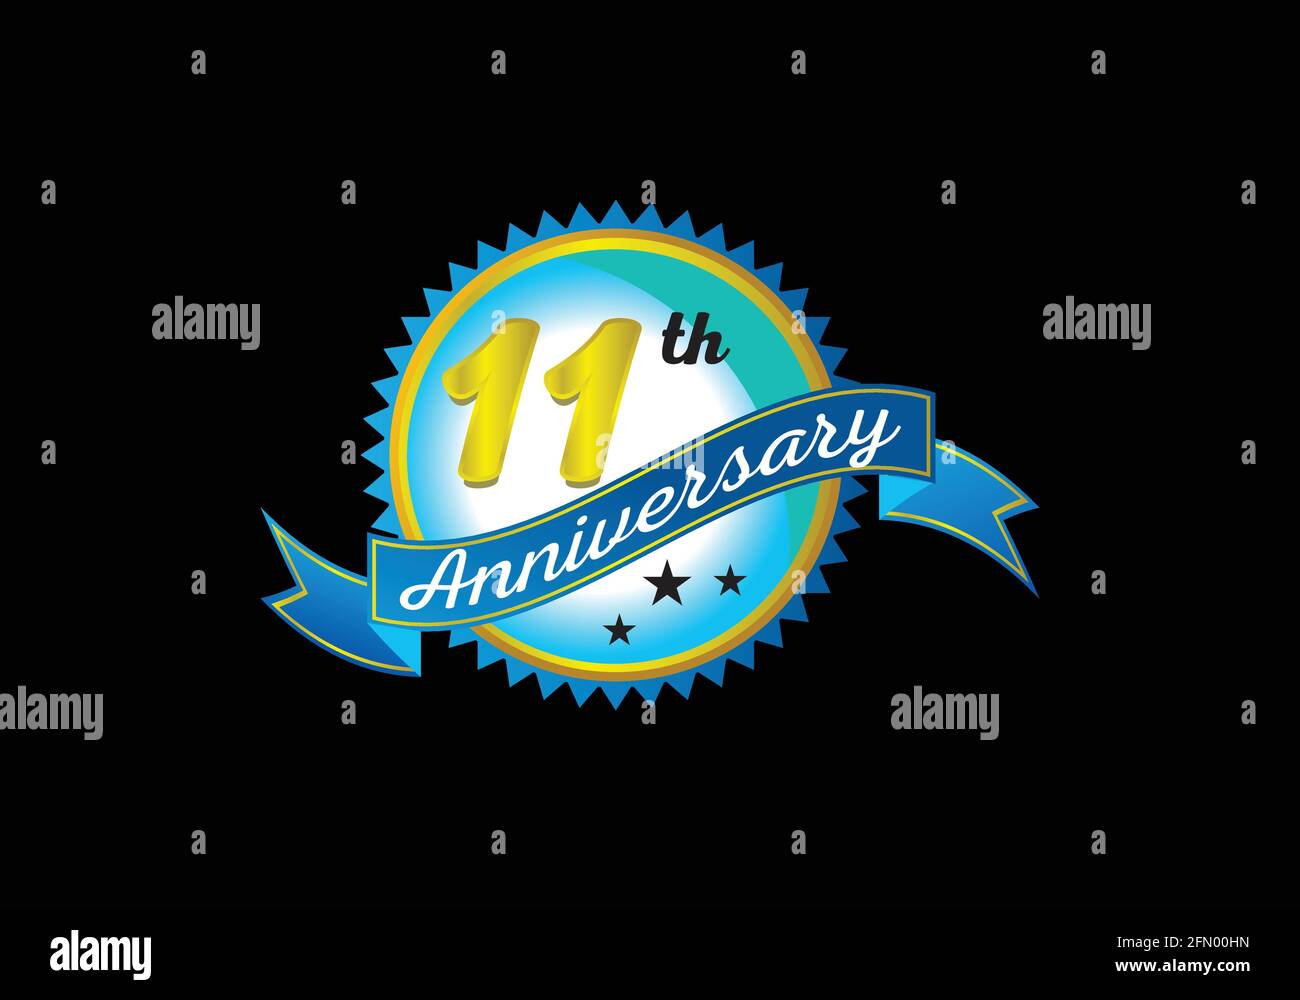 11th anniversary logo design vector template Stock Vector